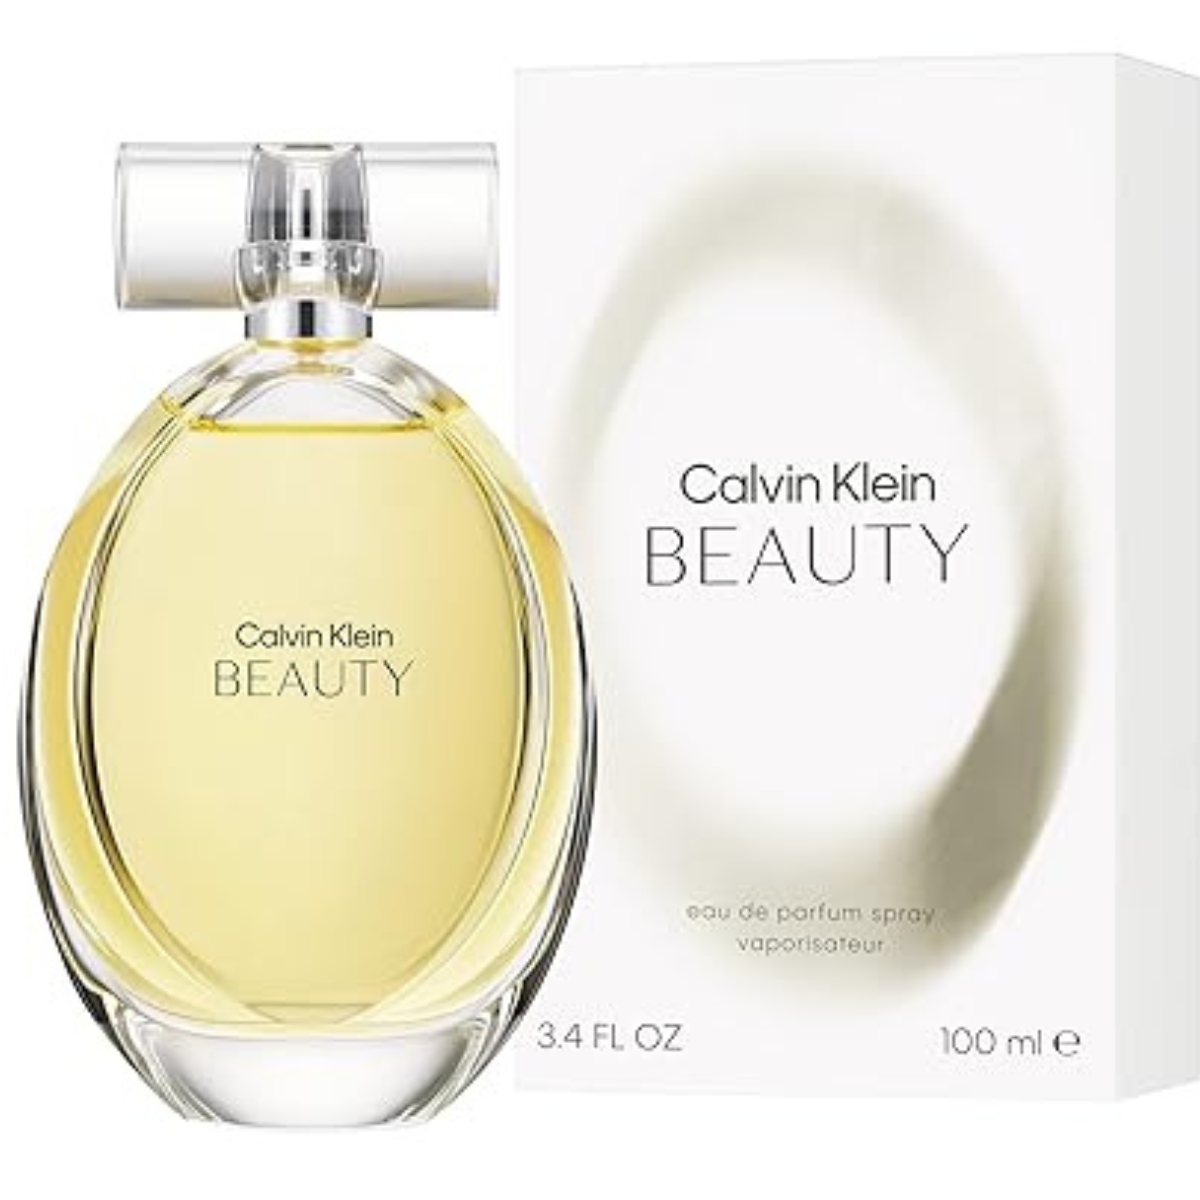 Calvin Klein Beauty 100 Ml For Women Perfume-1